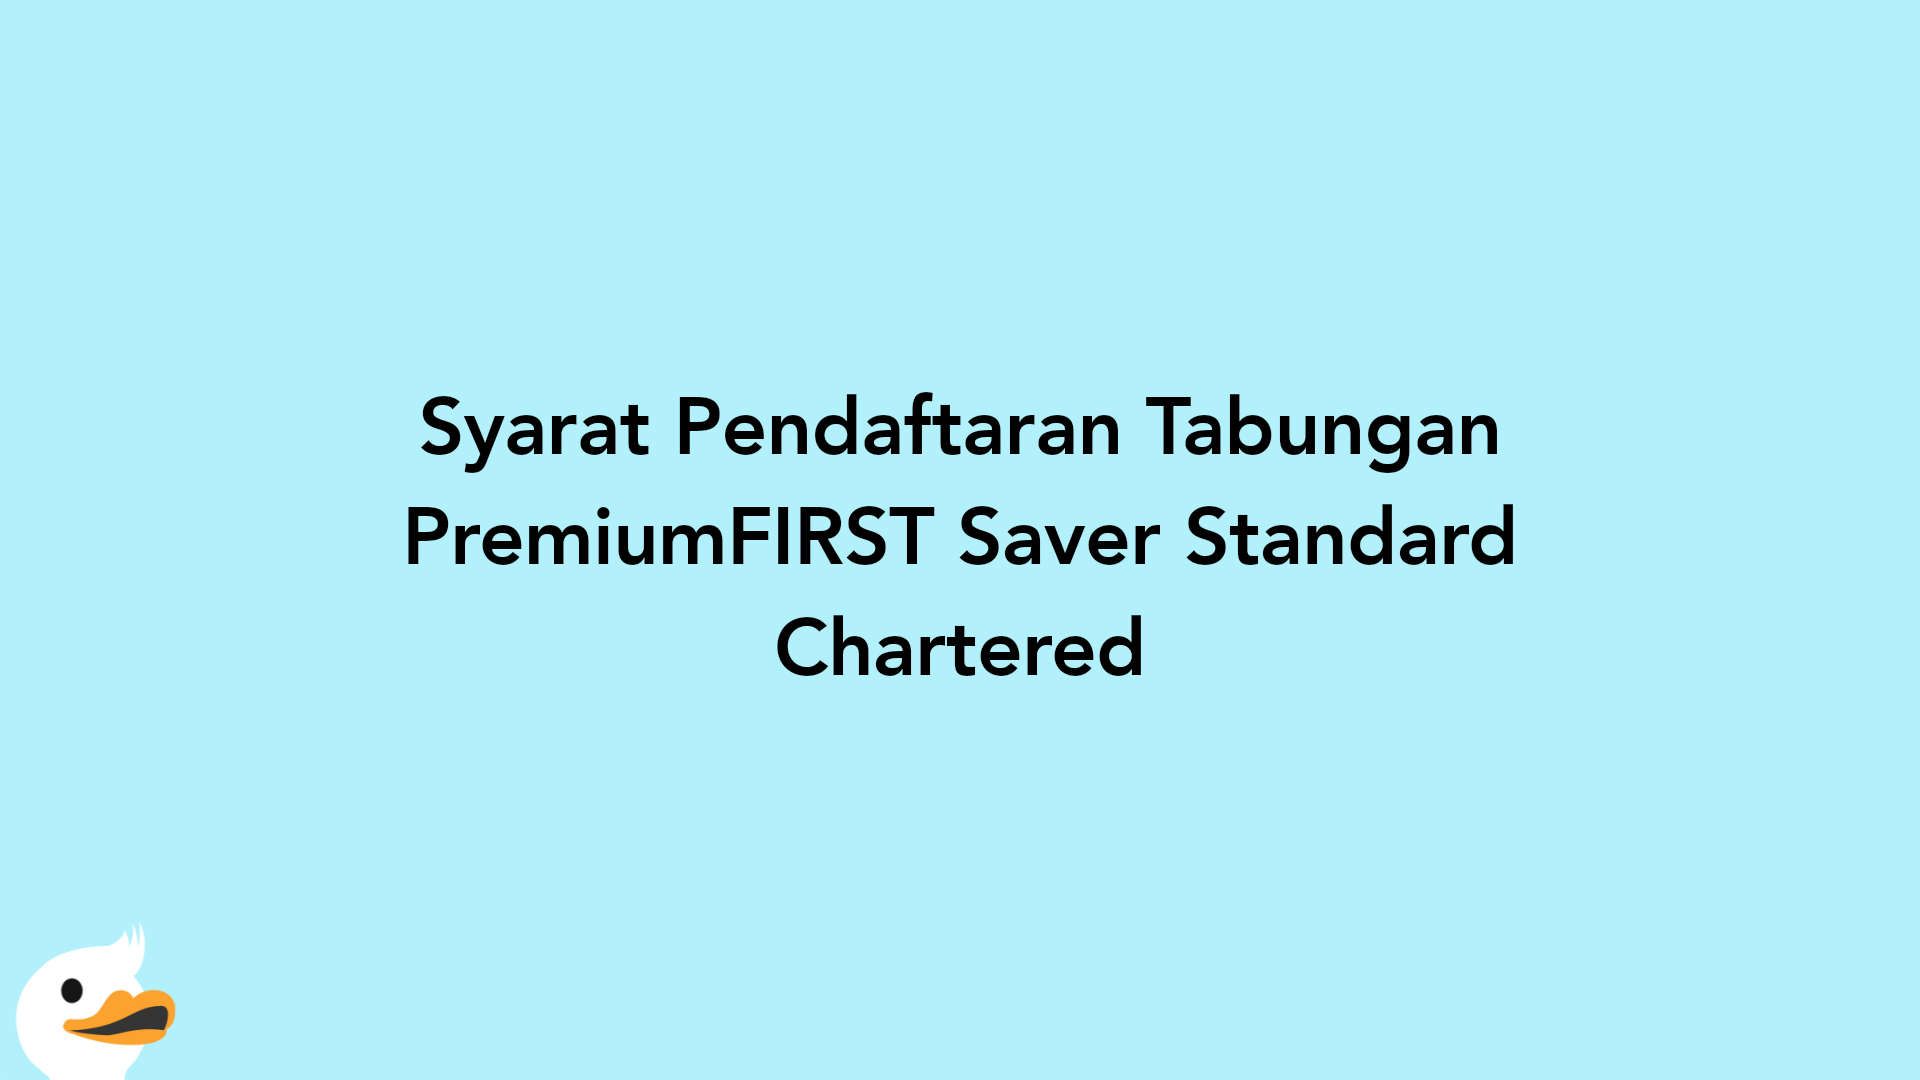 Syarat Pendaftaran Tabungan PremiumFIRST Saver Standard Chartered